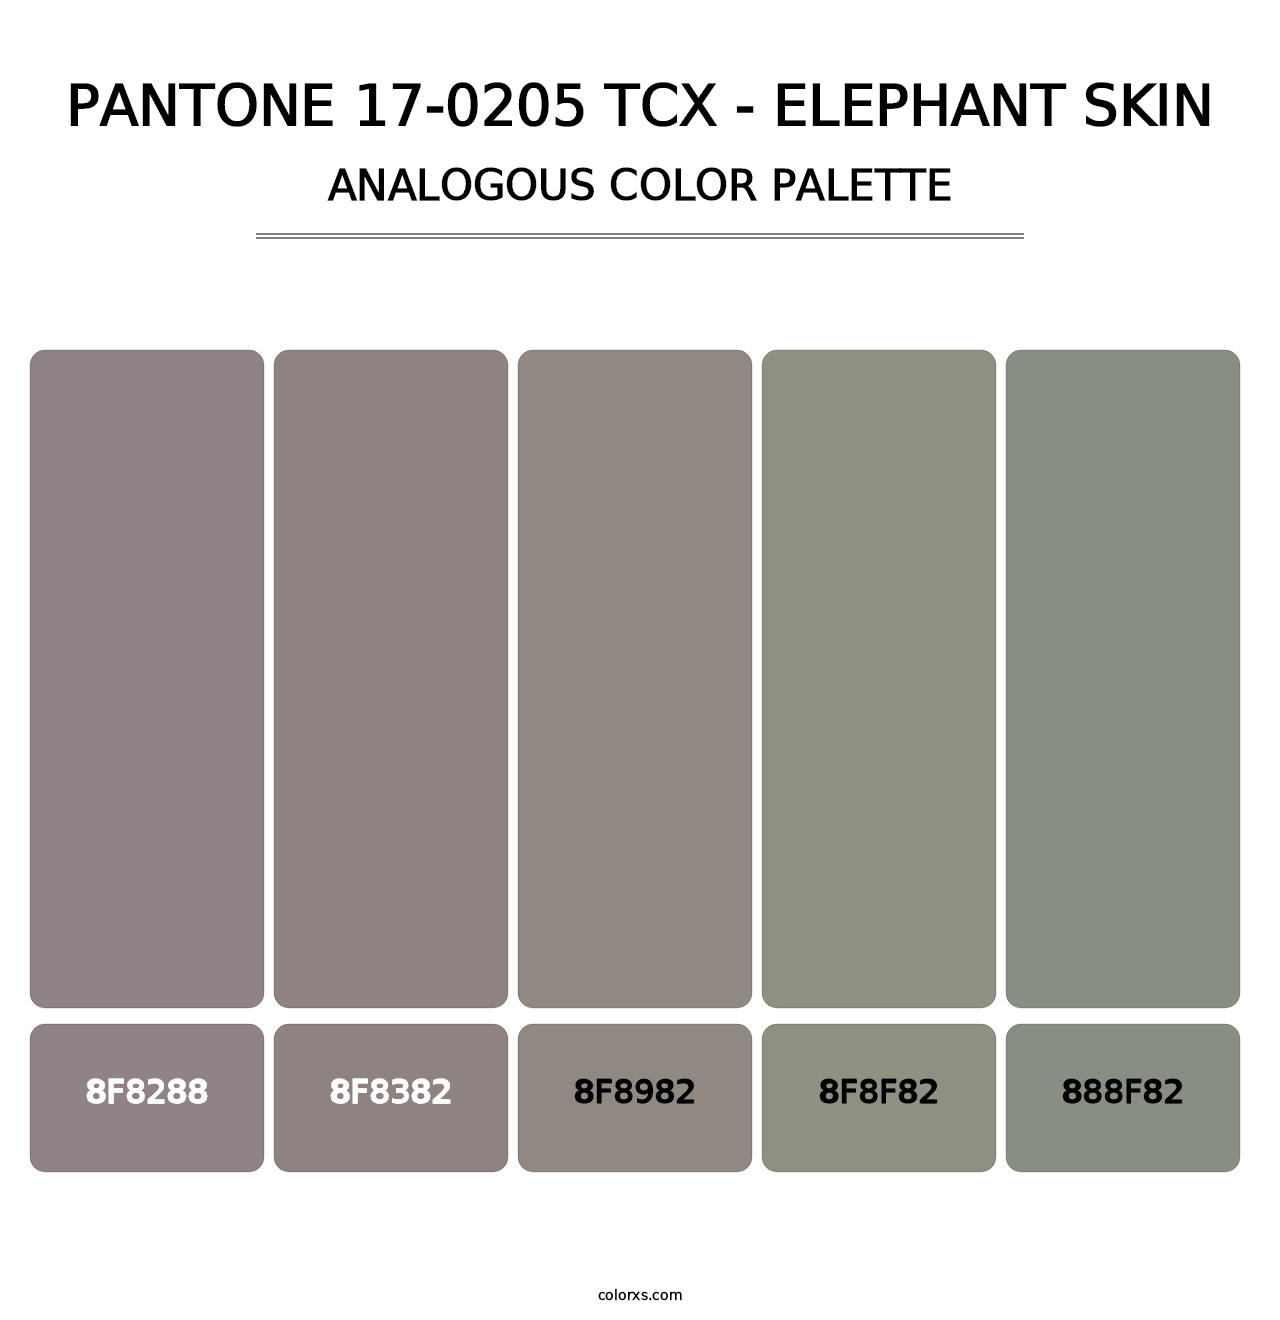 PANTONE 17-0205 TCX - Elephant Skin - Analogous Color Palette